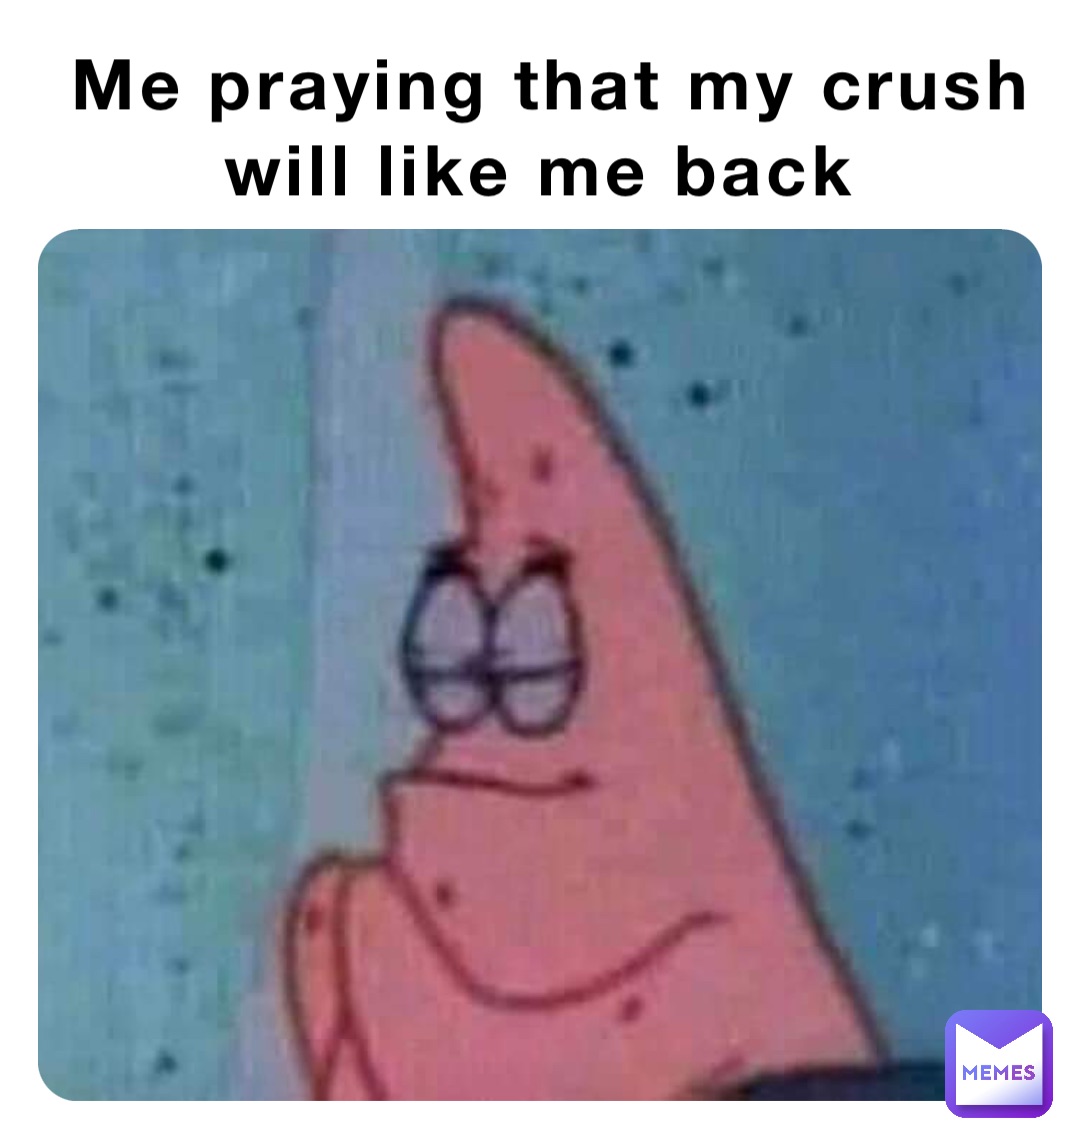 Me praying that my crush 
will like me back